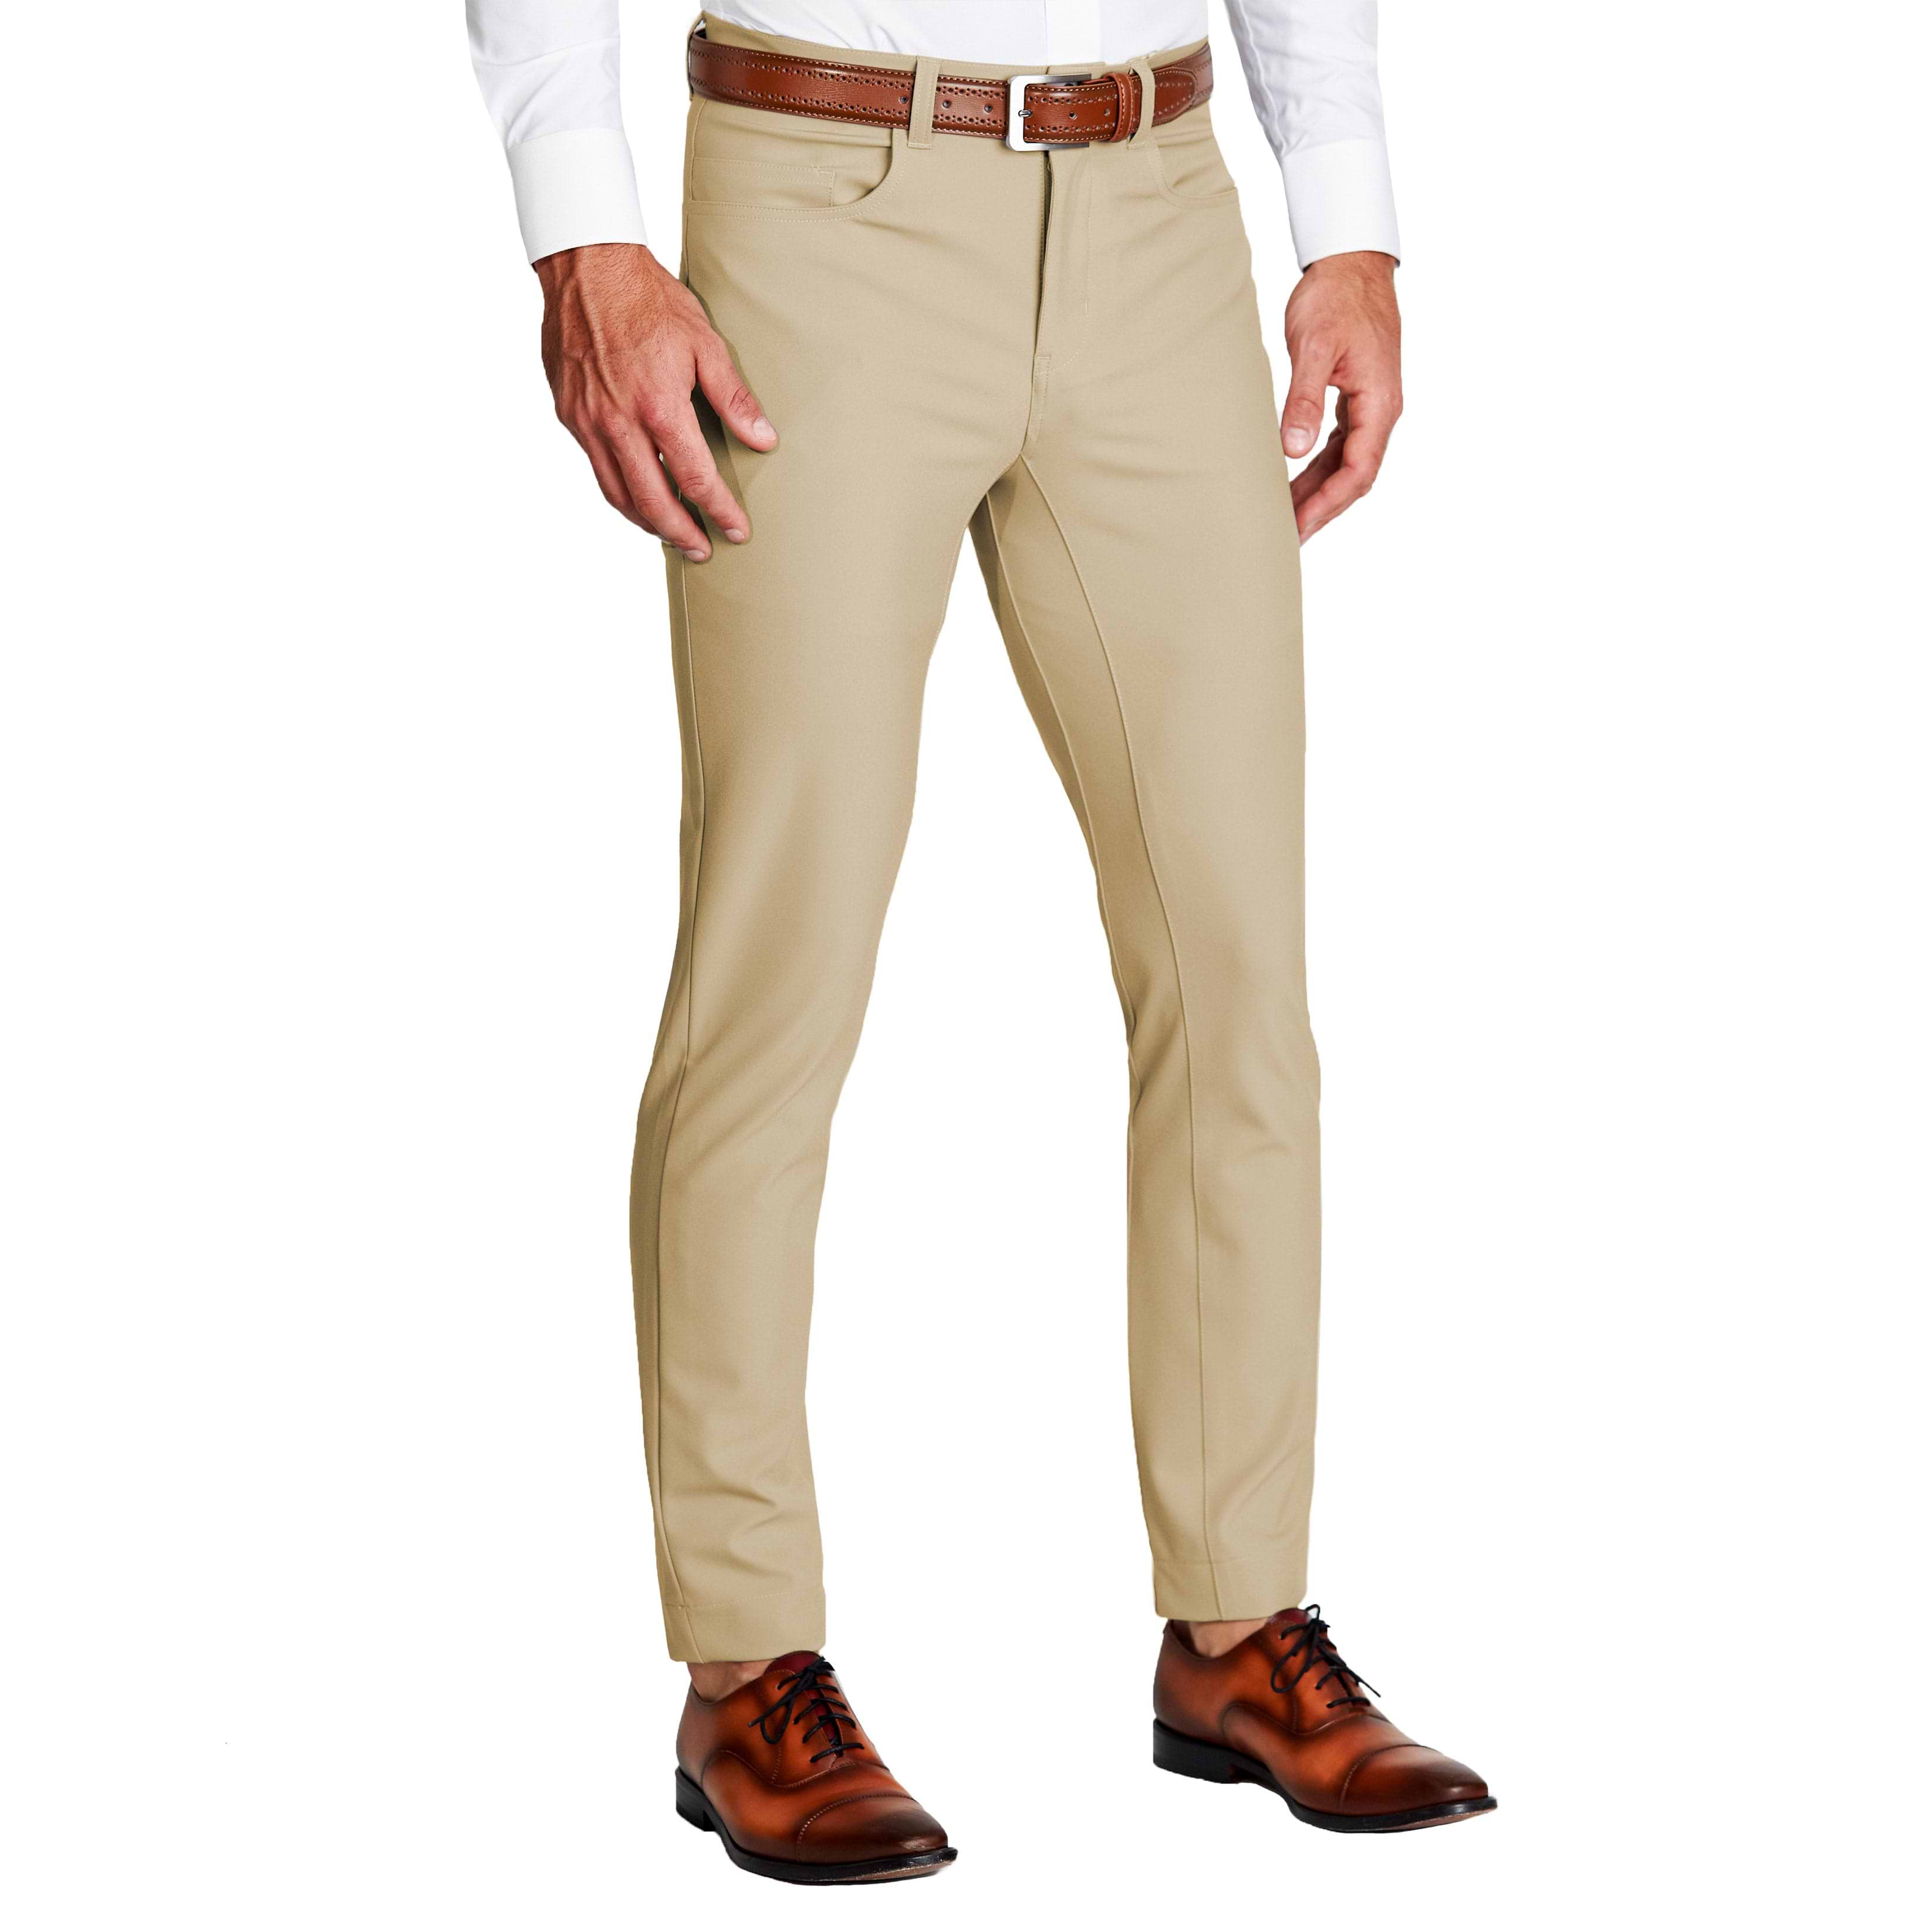 Denims & Trousers Black Mens Cotton Trouser, Size: Medium, Good Matterial  at Rs 300 in Dehradun